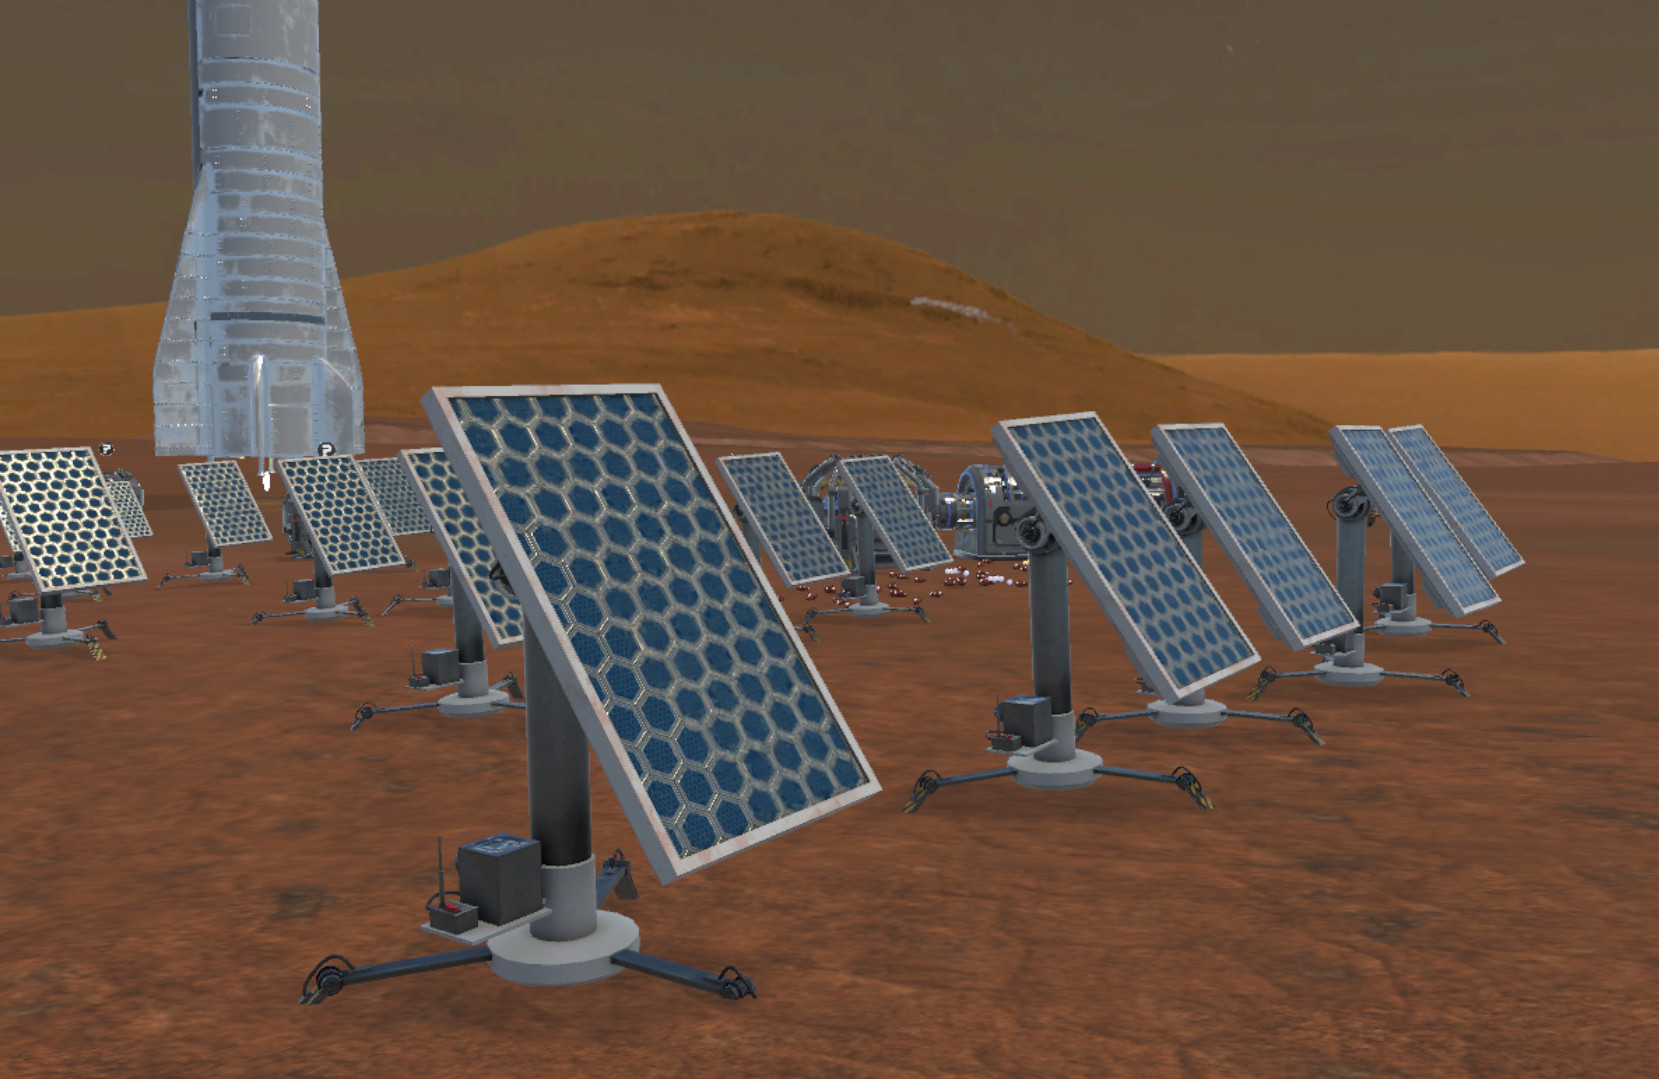 Million on Mars screenshot